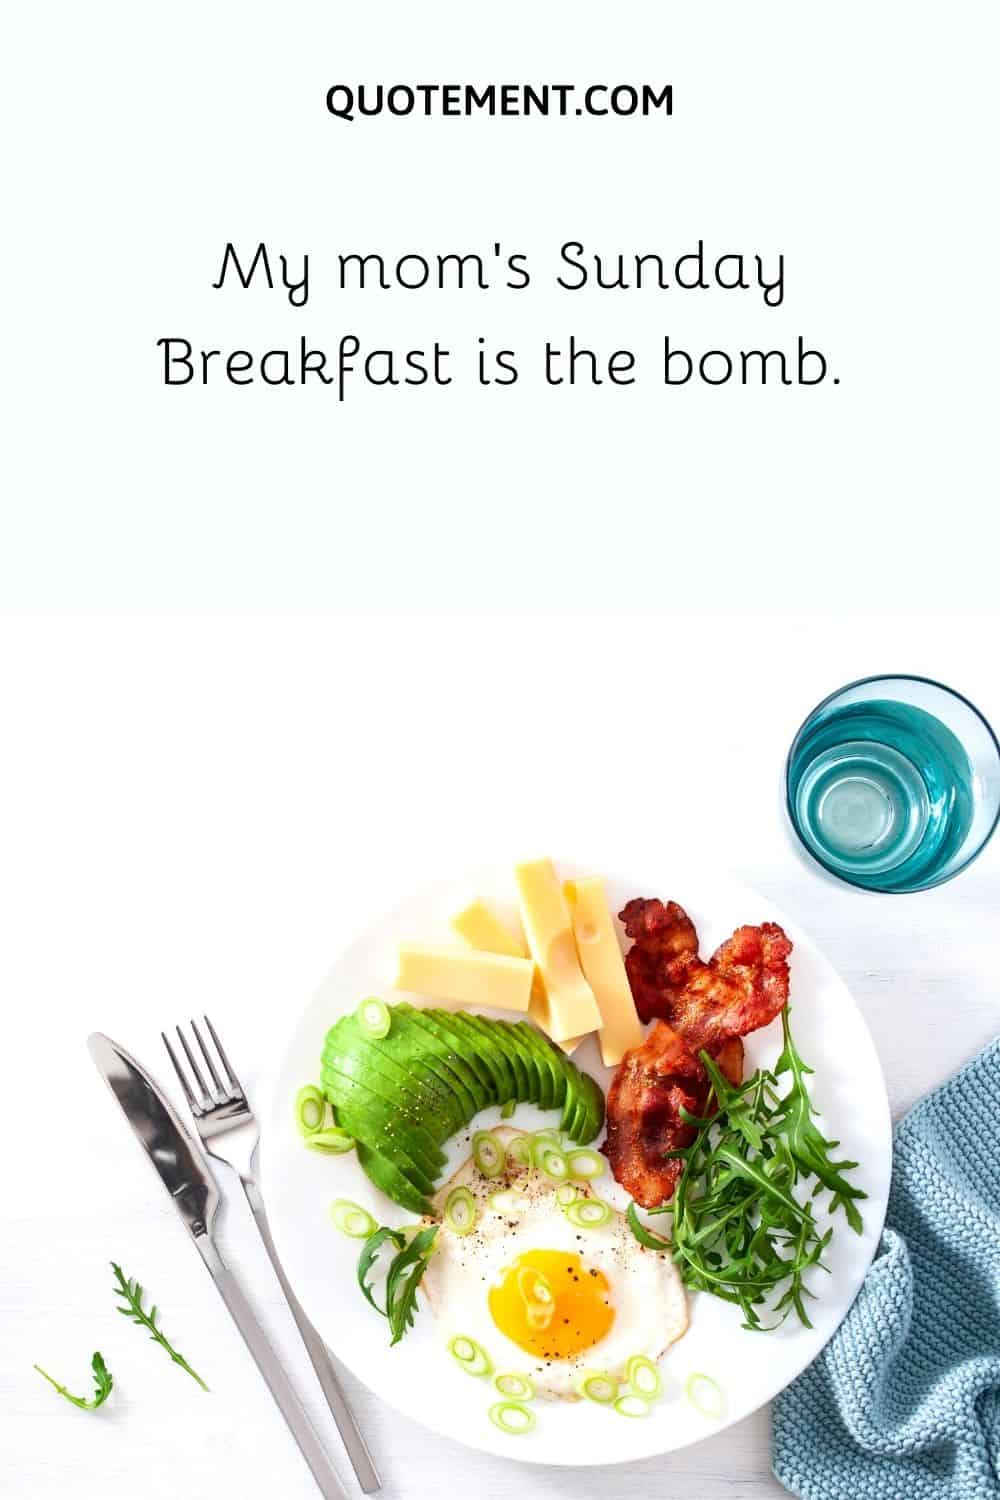 My mom’s Sunday Breakfast is the bomb.